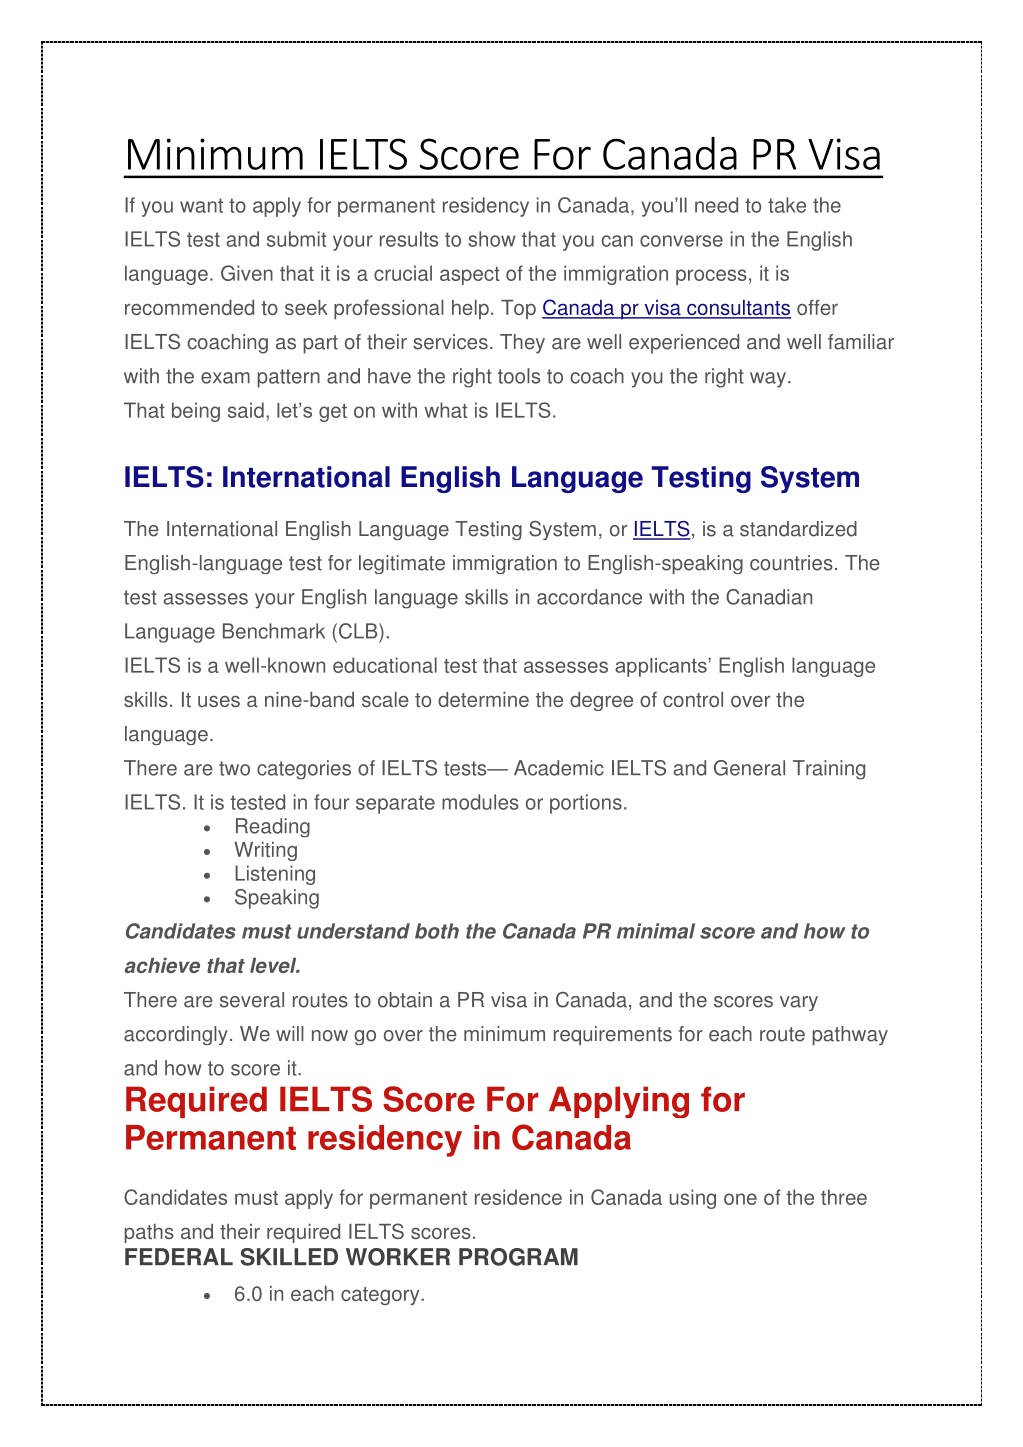 PPT Minimum IELTS Score For Canada PR Visa PowerPoint Presentation, free download ID11497491